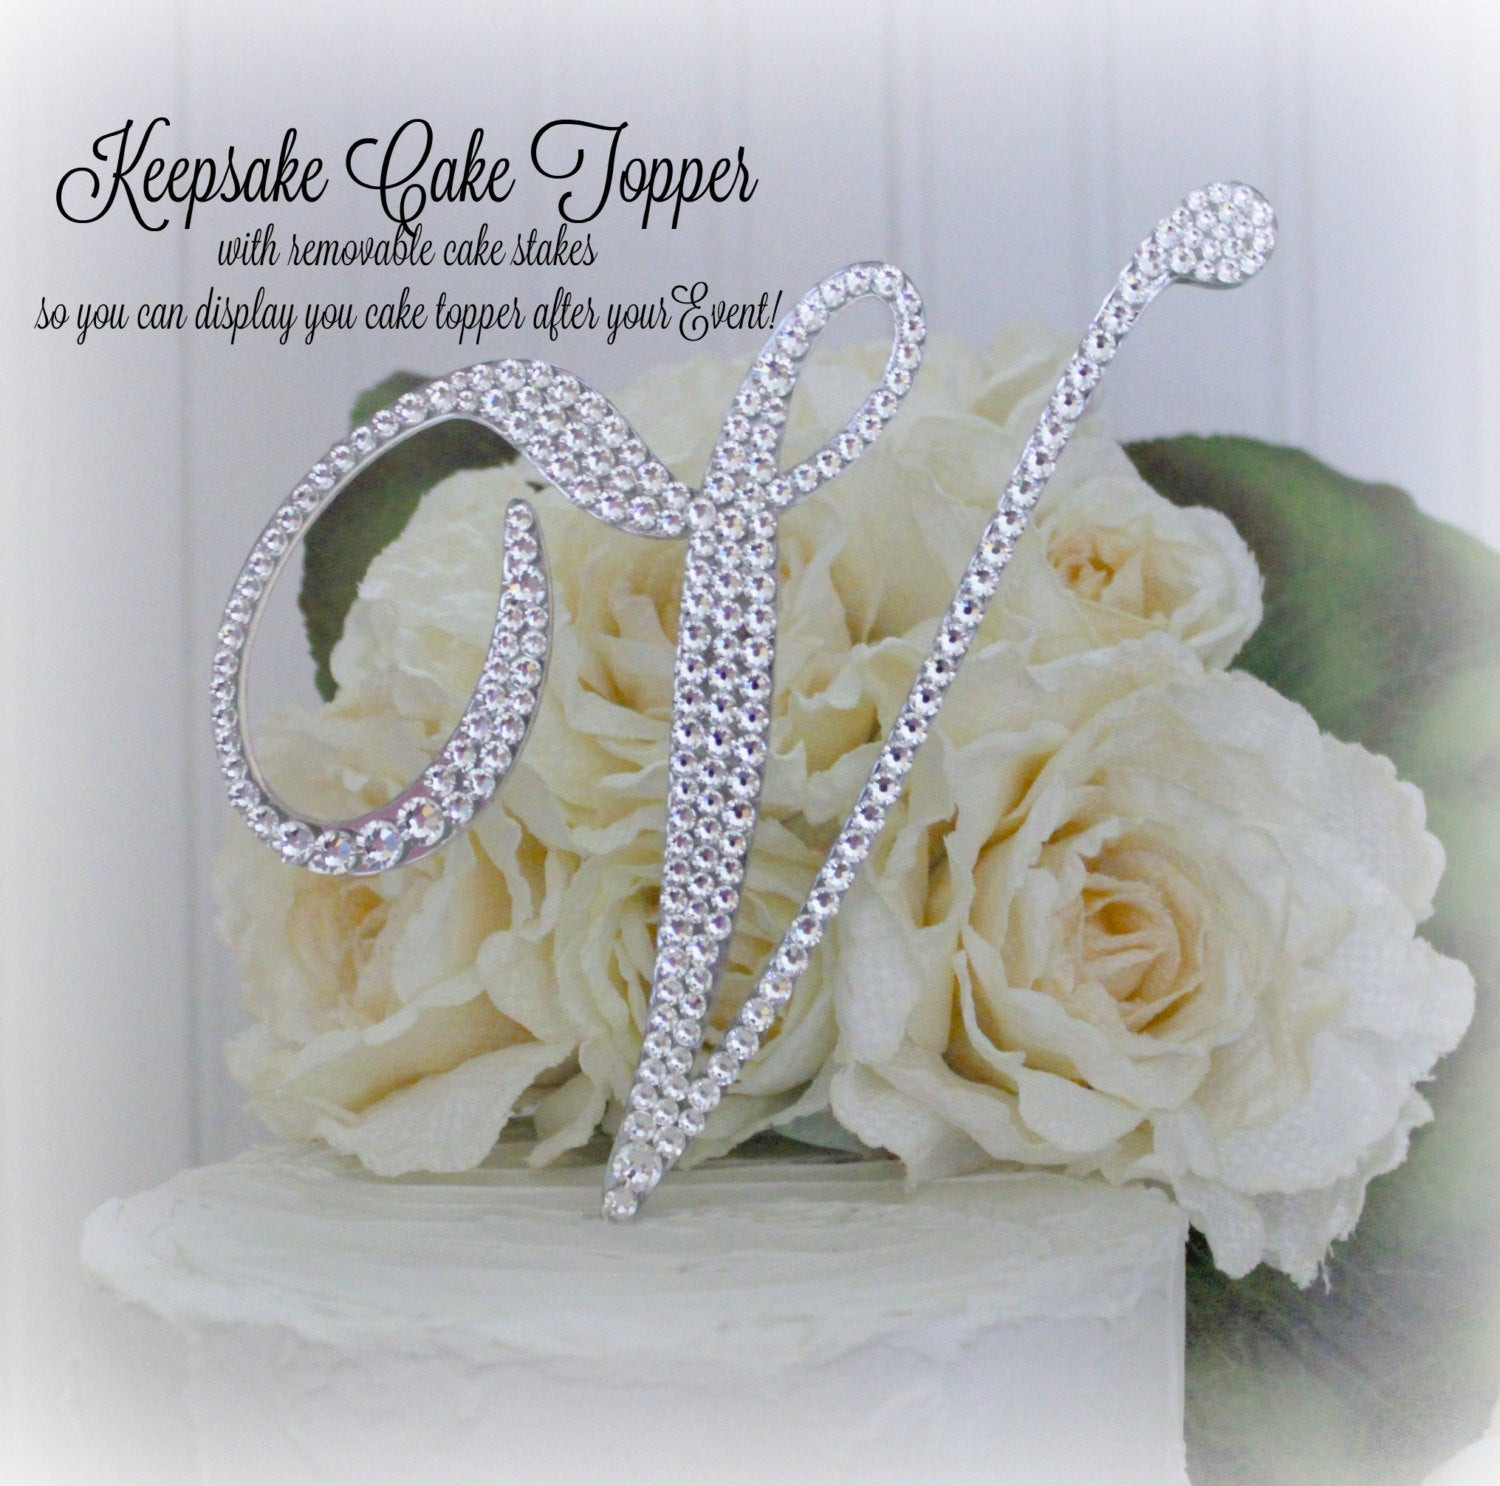 Initial Wedding Cake Toppers
 6 Wedding Cake Topper Monogram Cake Topper Initial